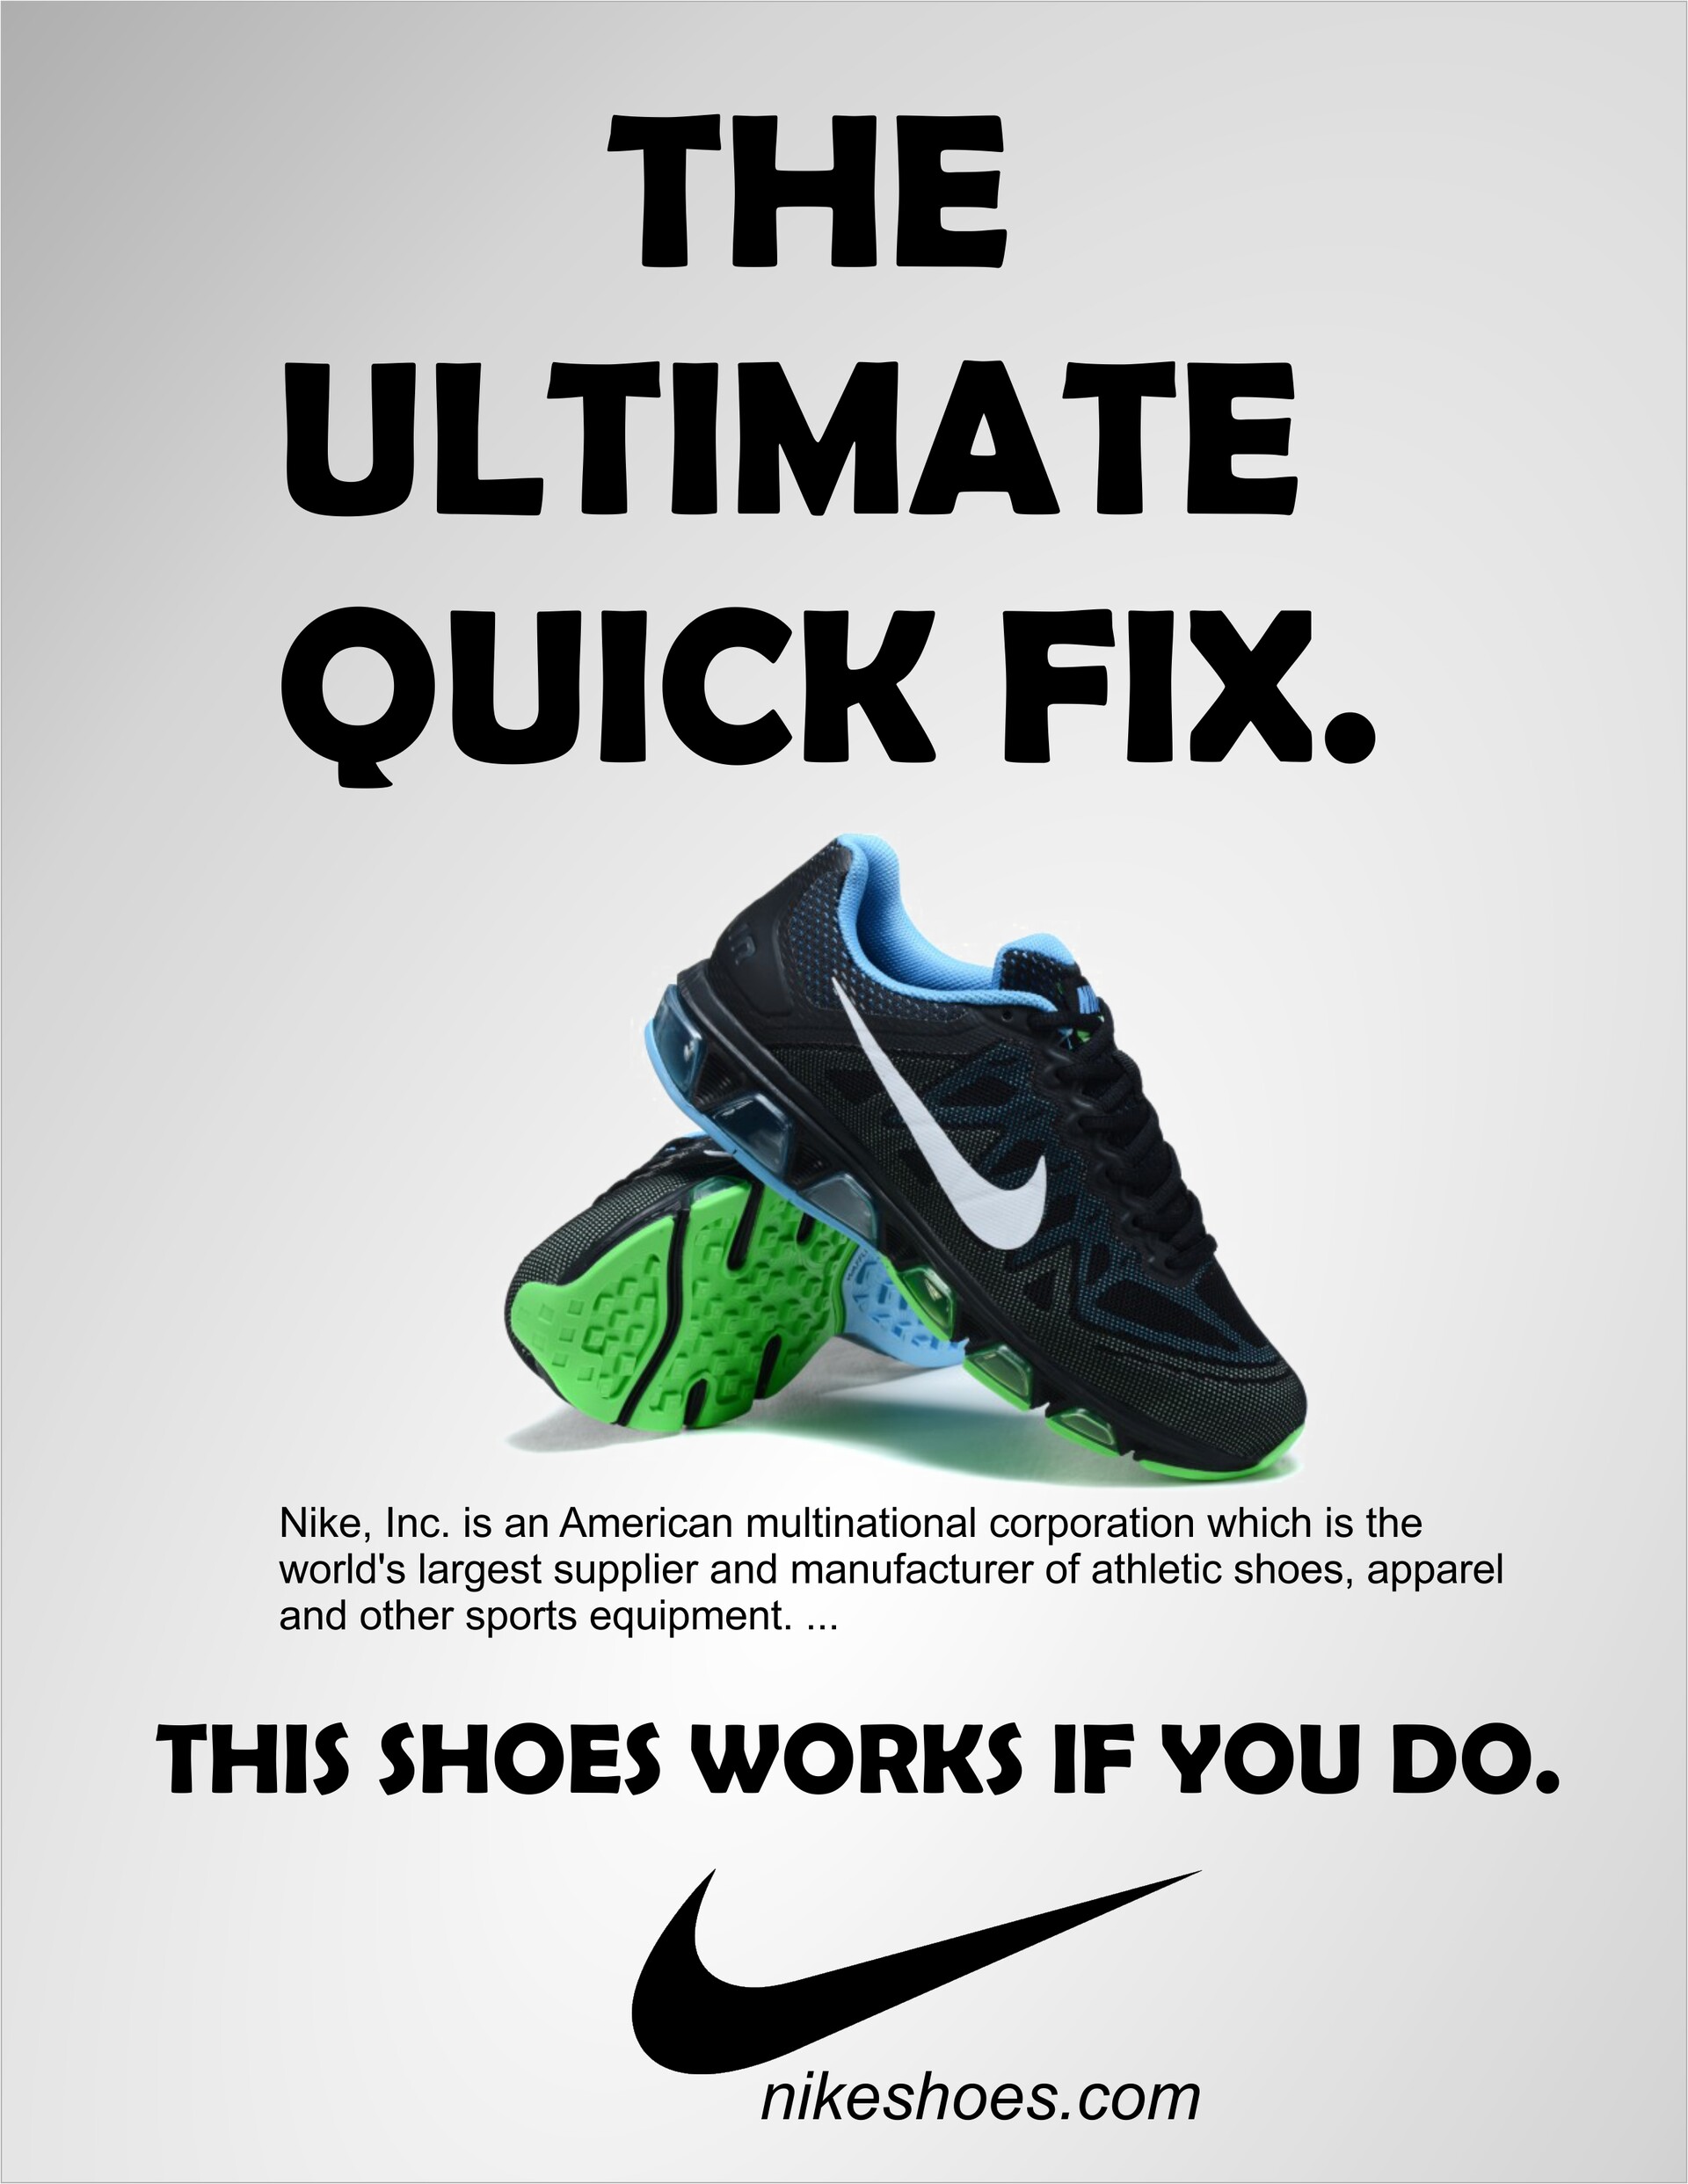 nike shoes advert